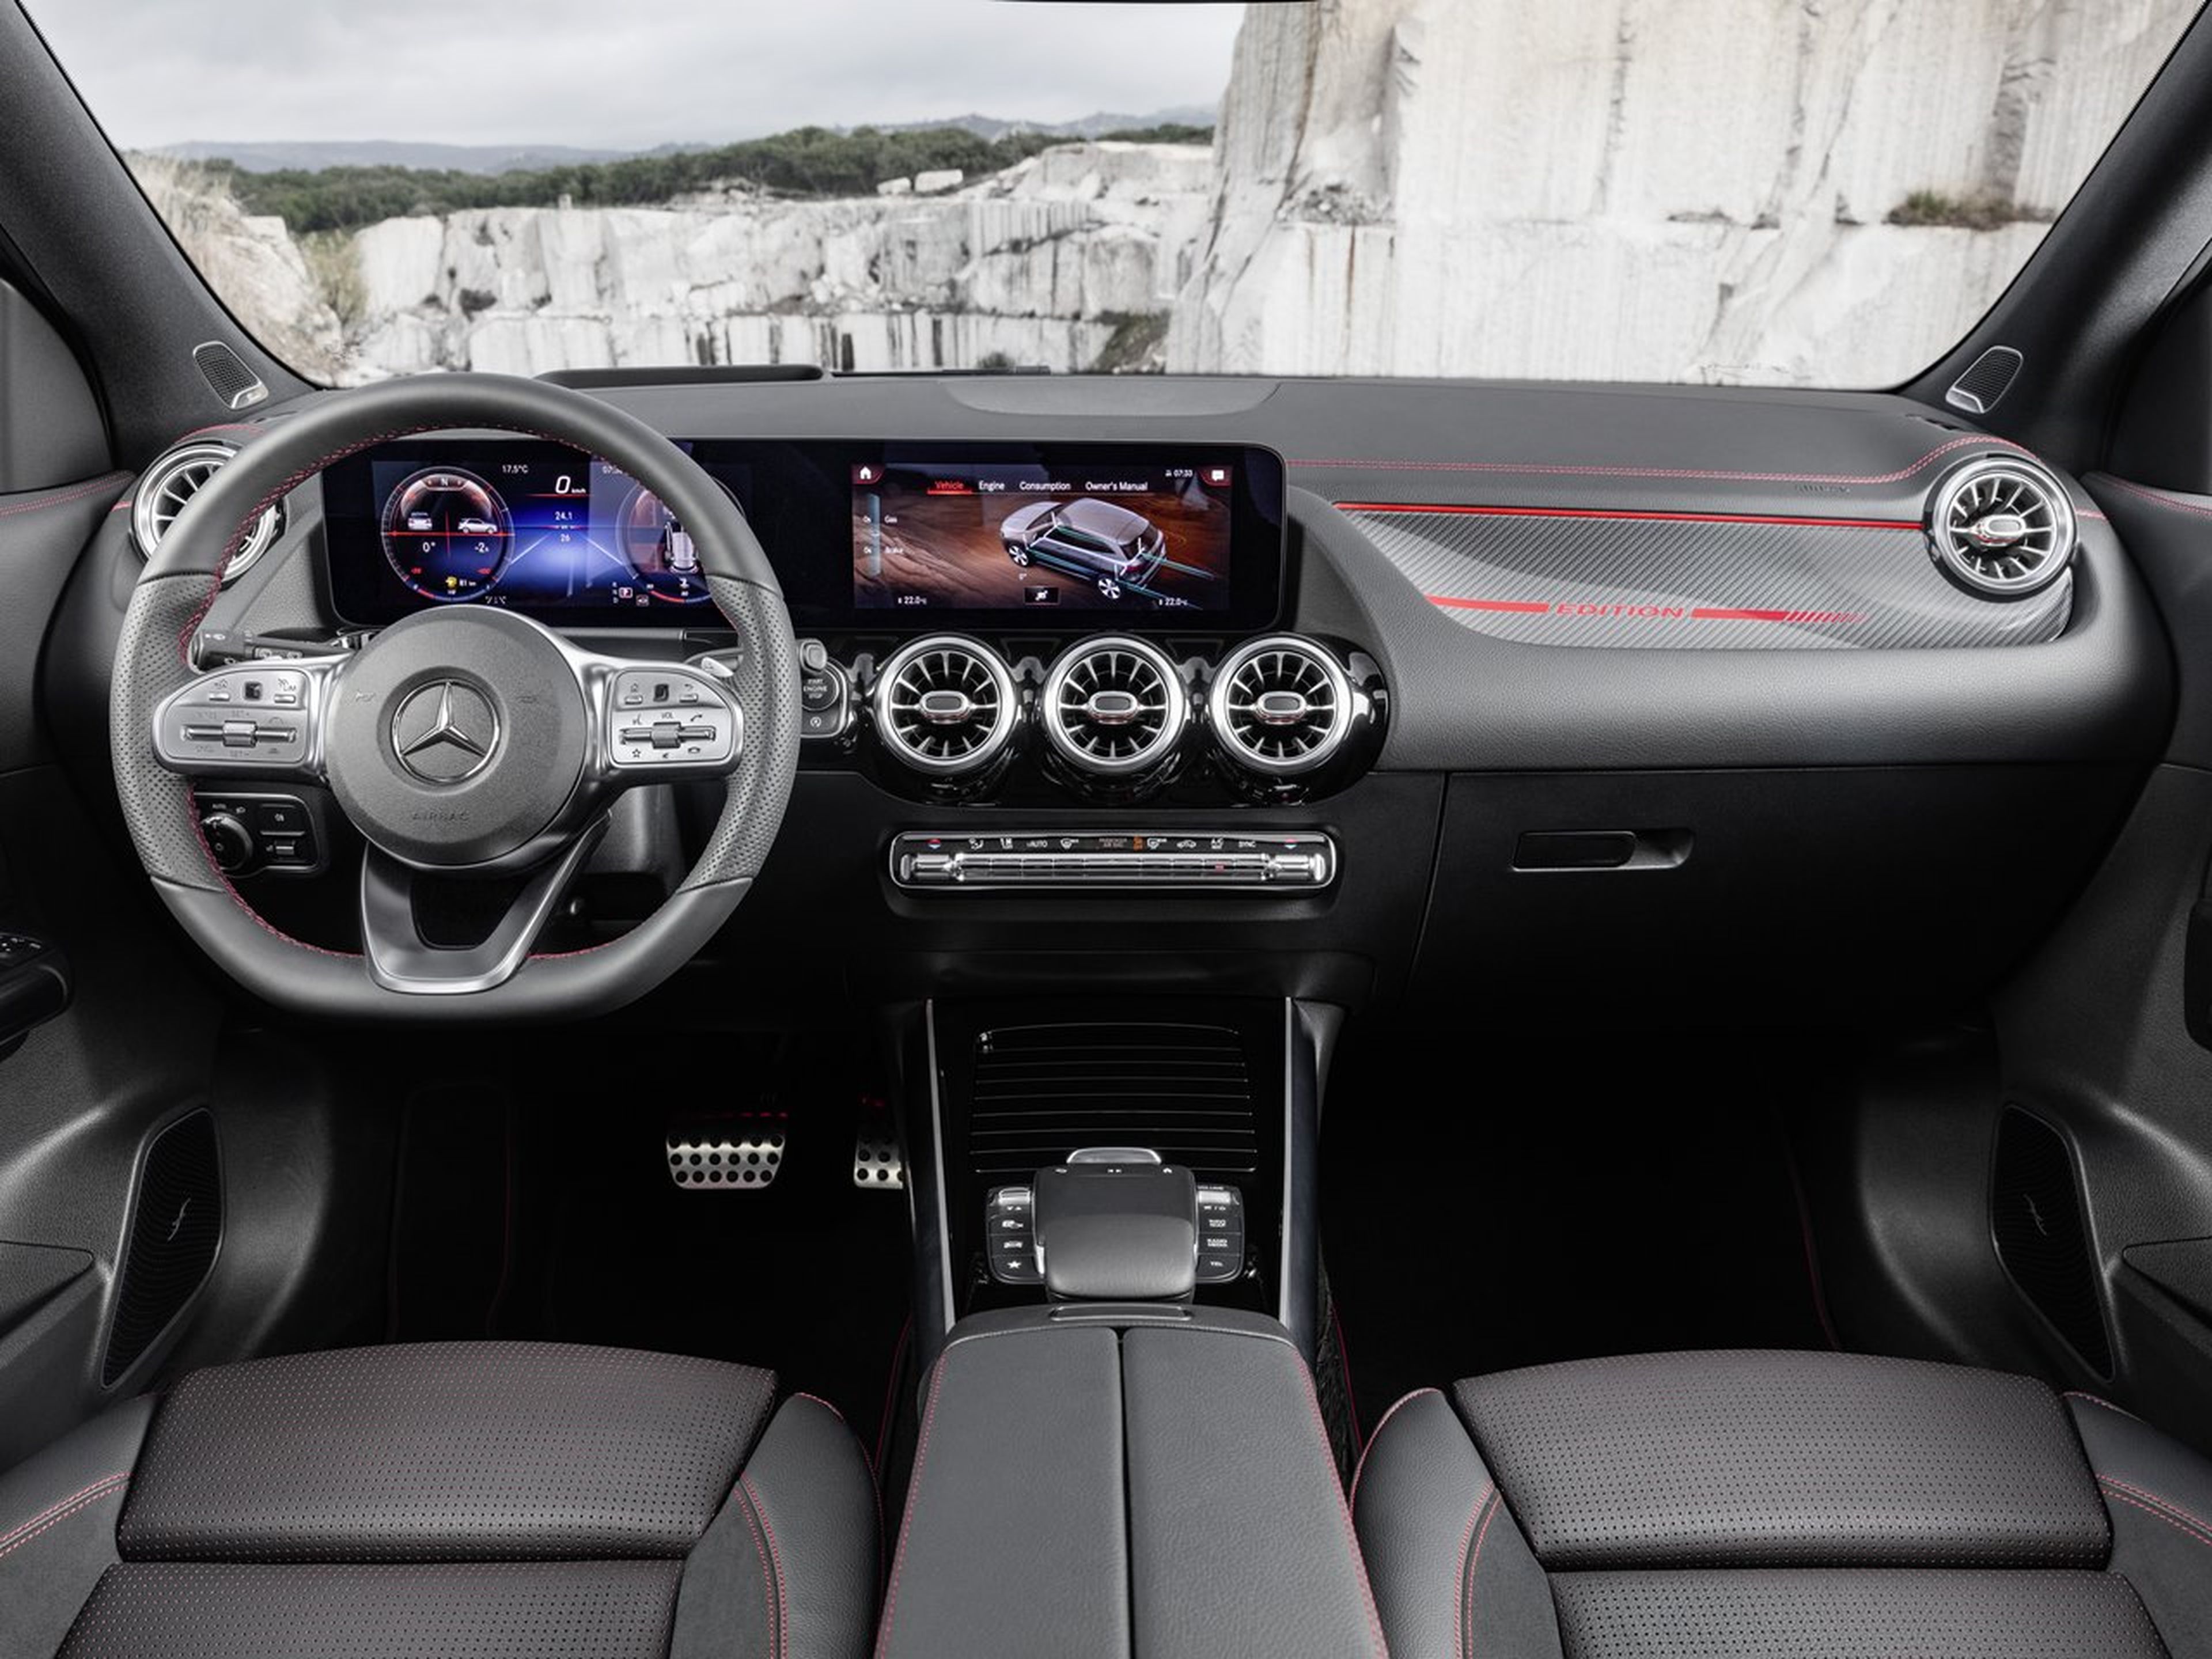 Mercedes-Benz GLA interior